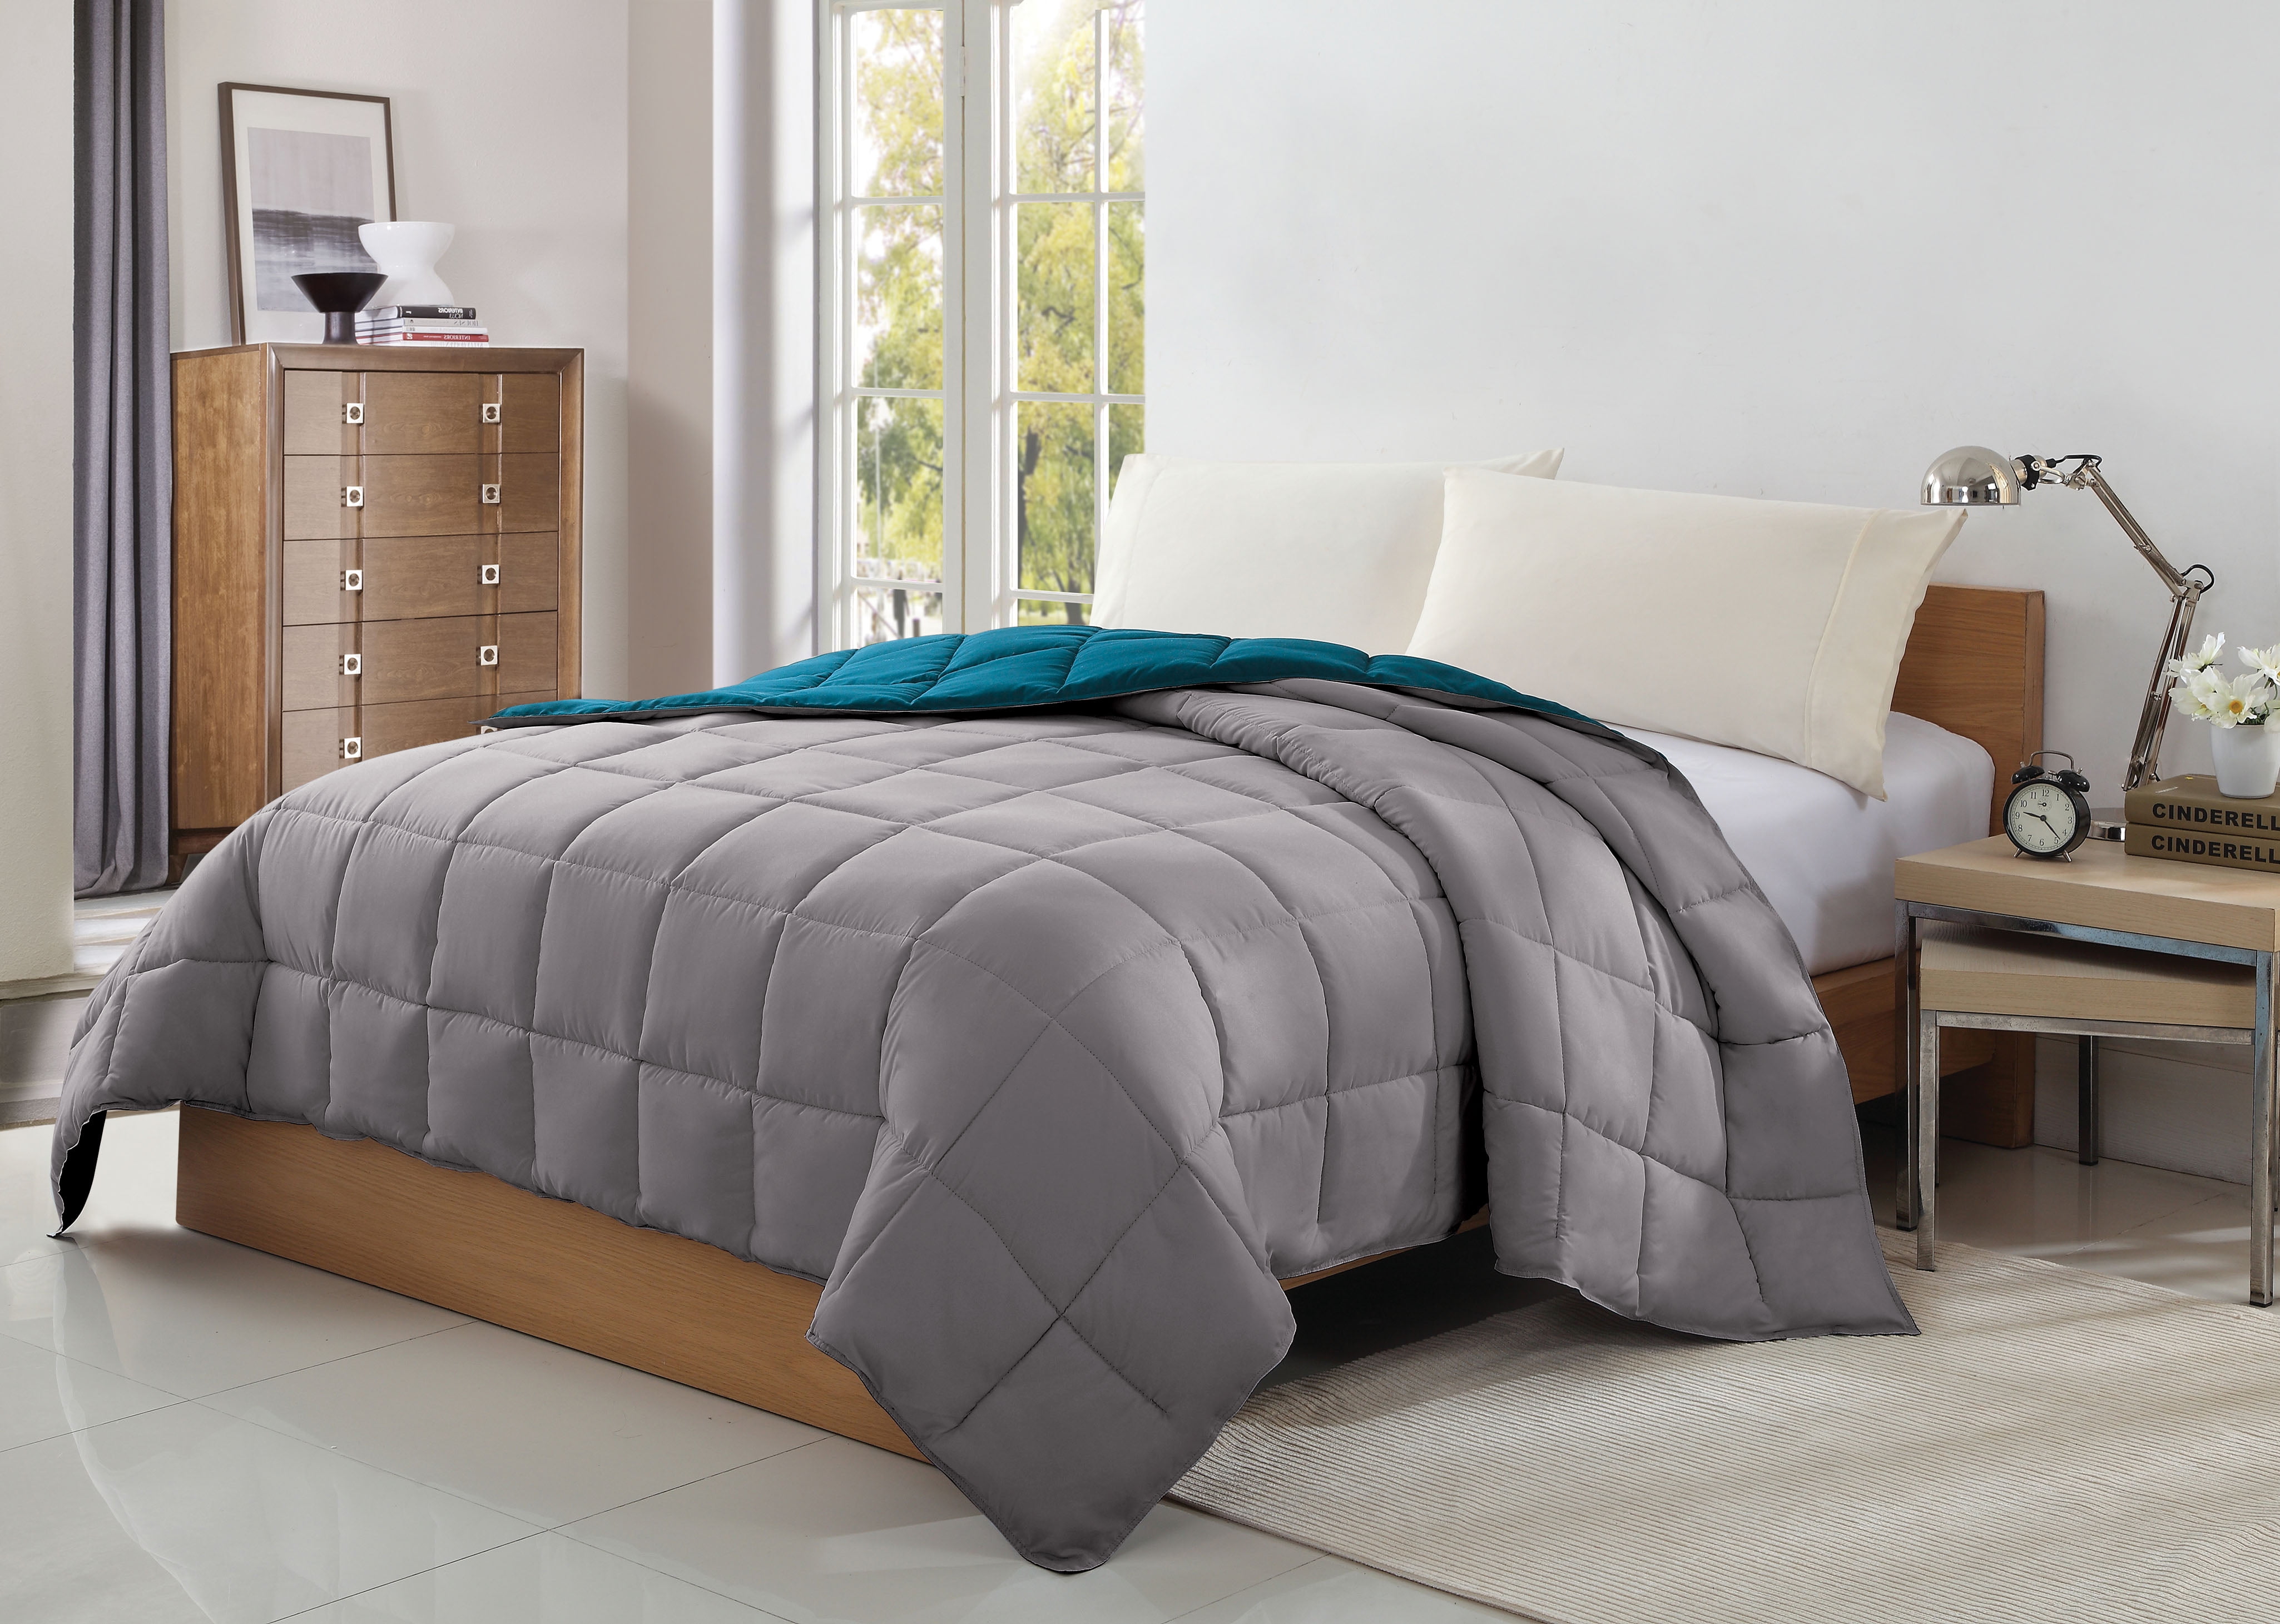 luxury twin xl mattress topper